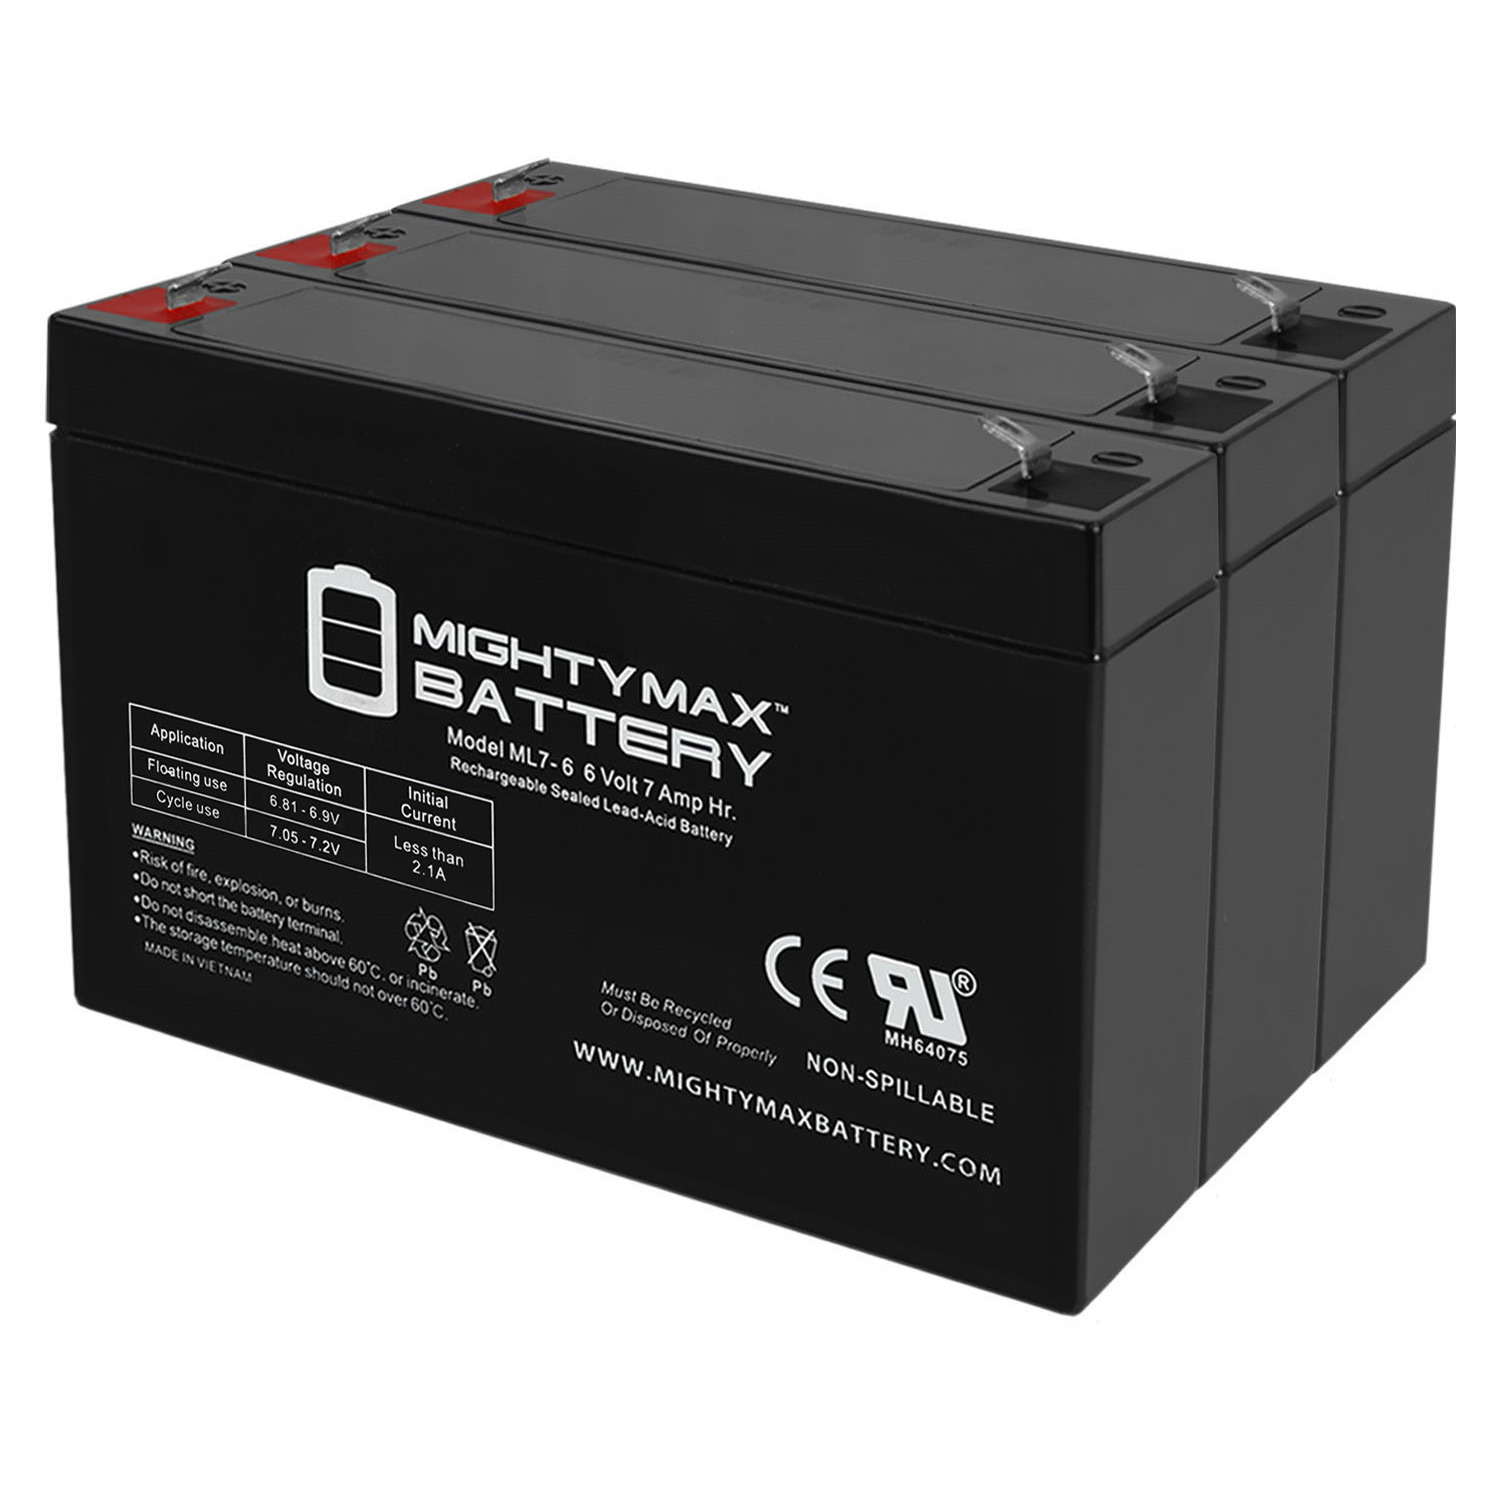 6V 7Ah SLA Replacement Battery for Sure-Lites 46 - 3 Pack